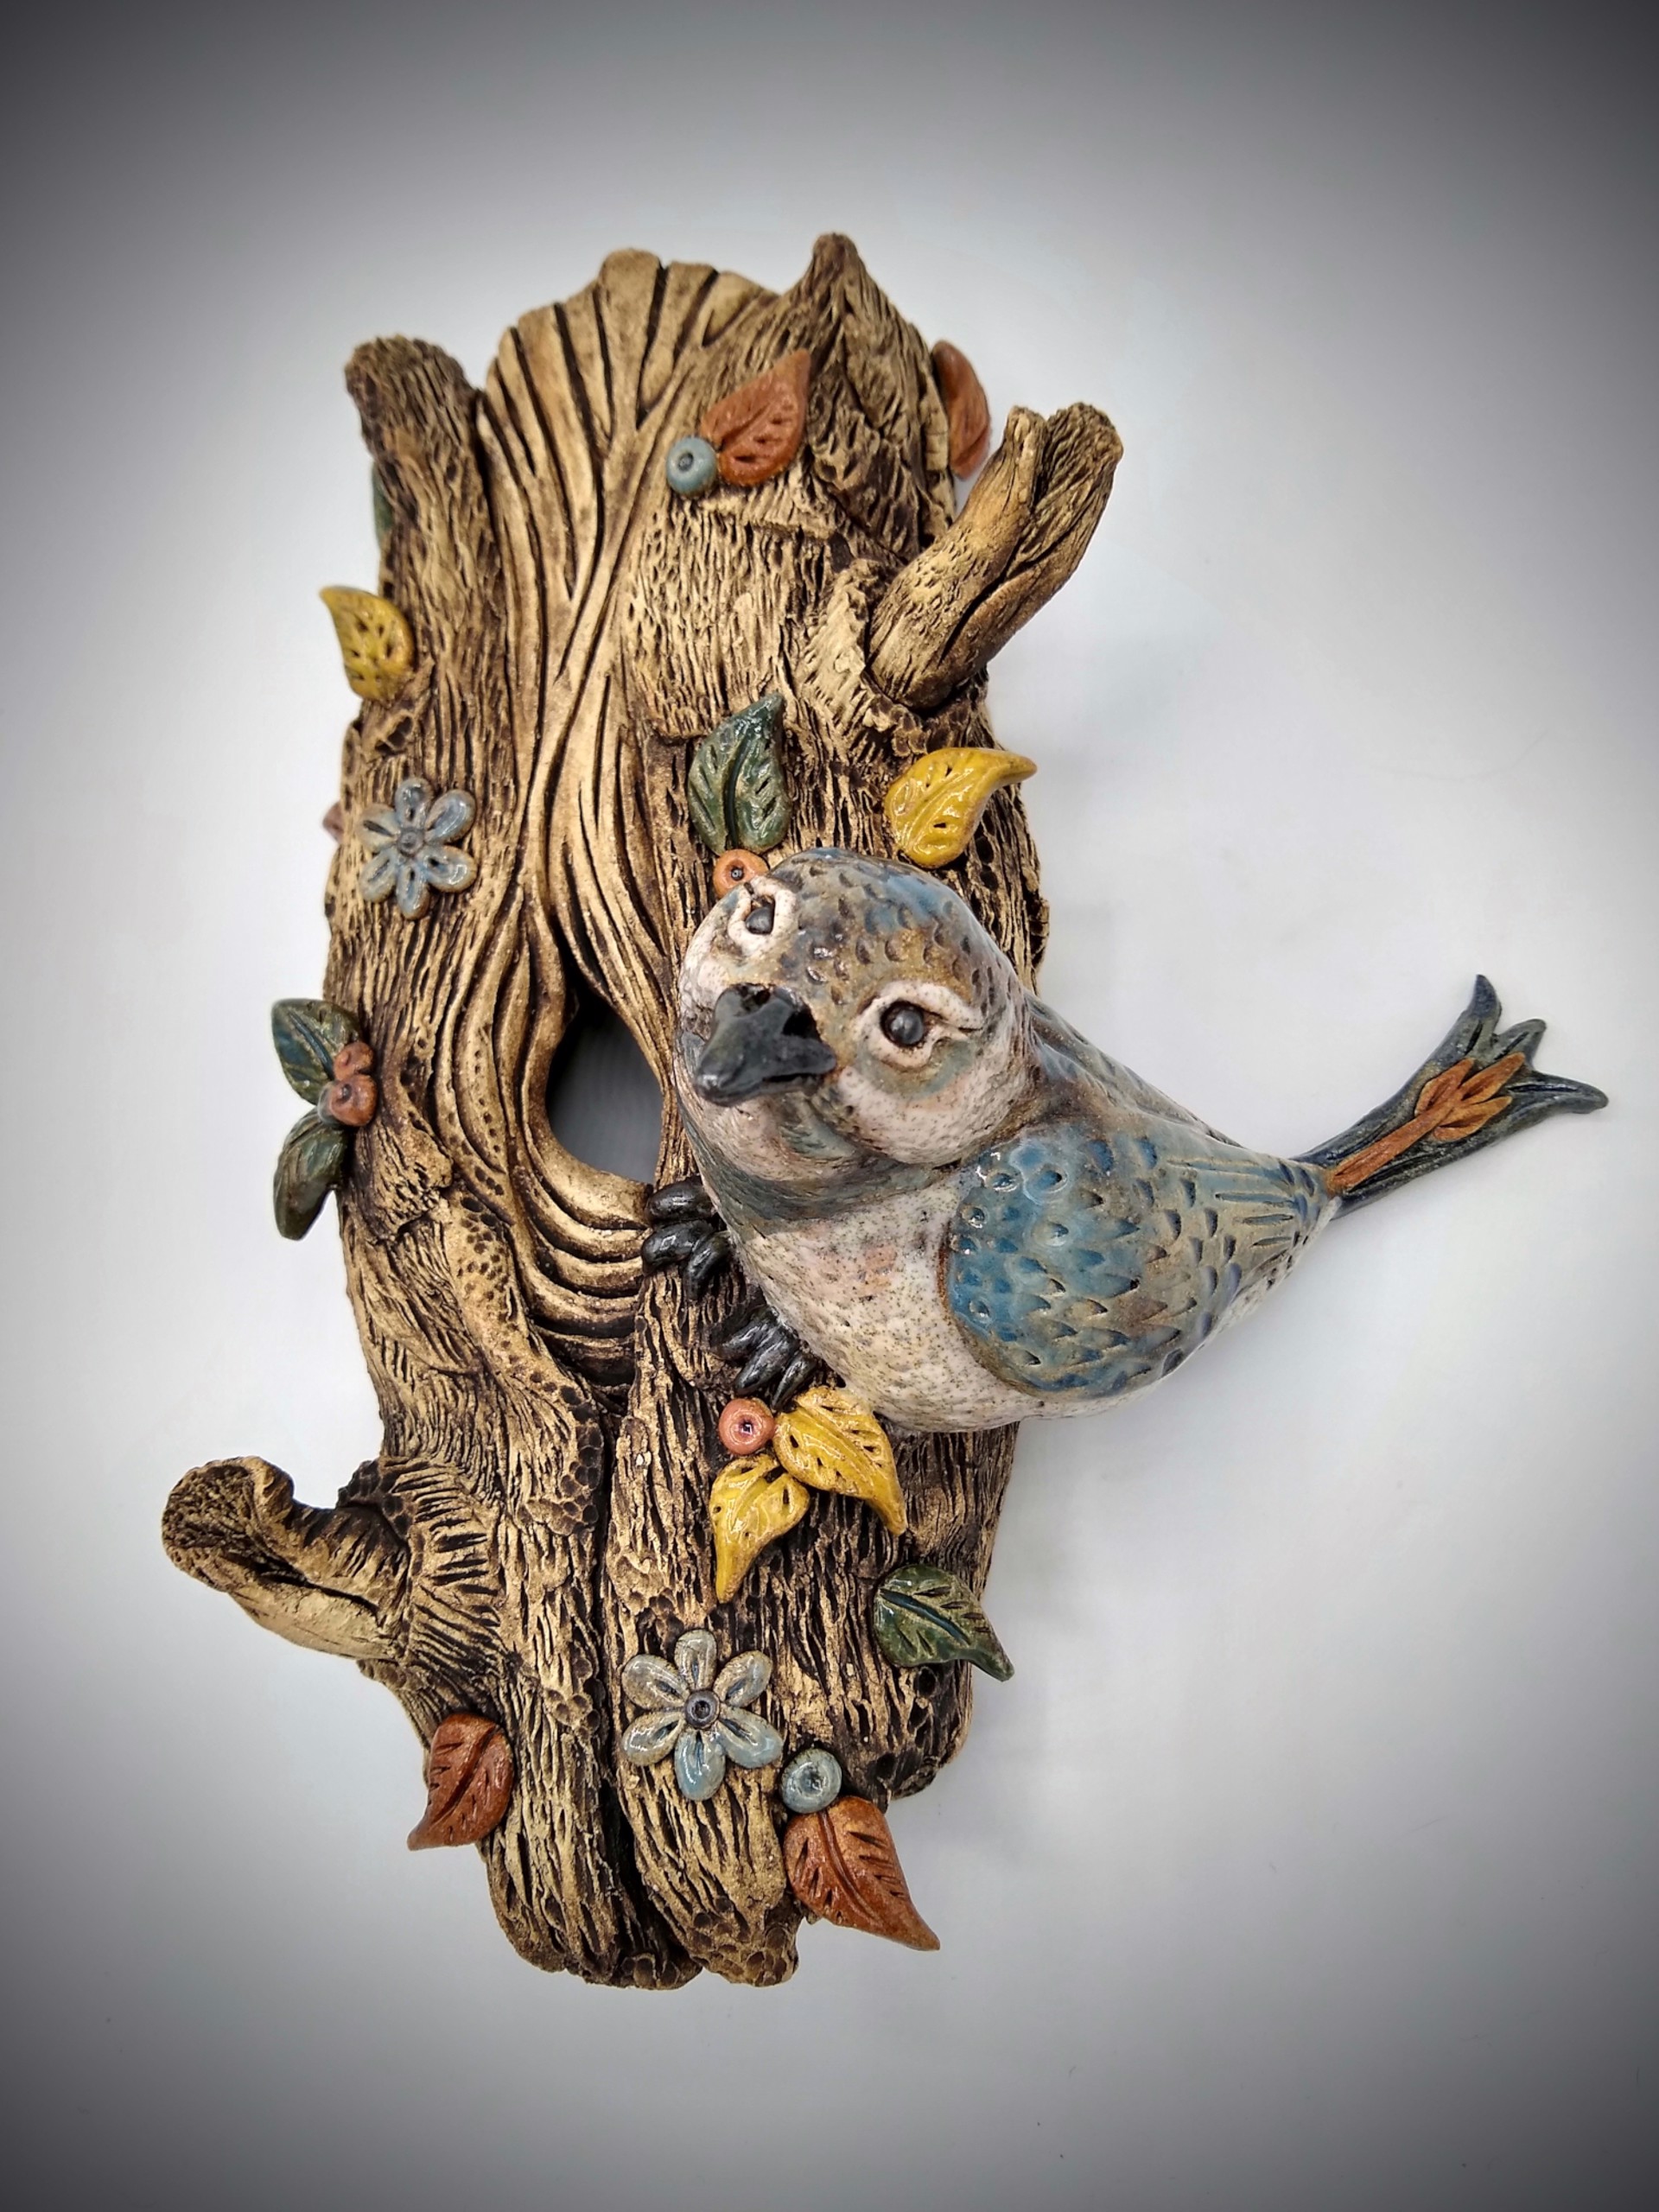 The Nest by Cheryl Quintana